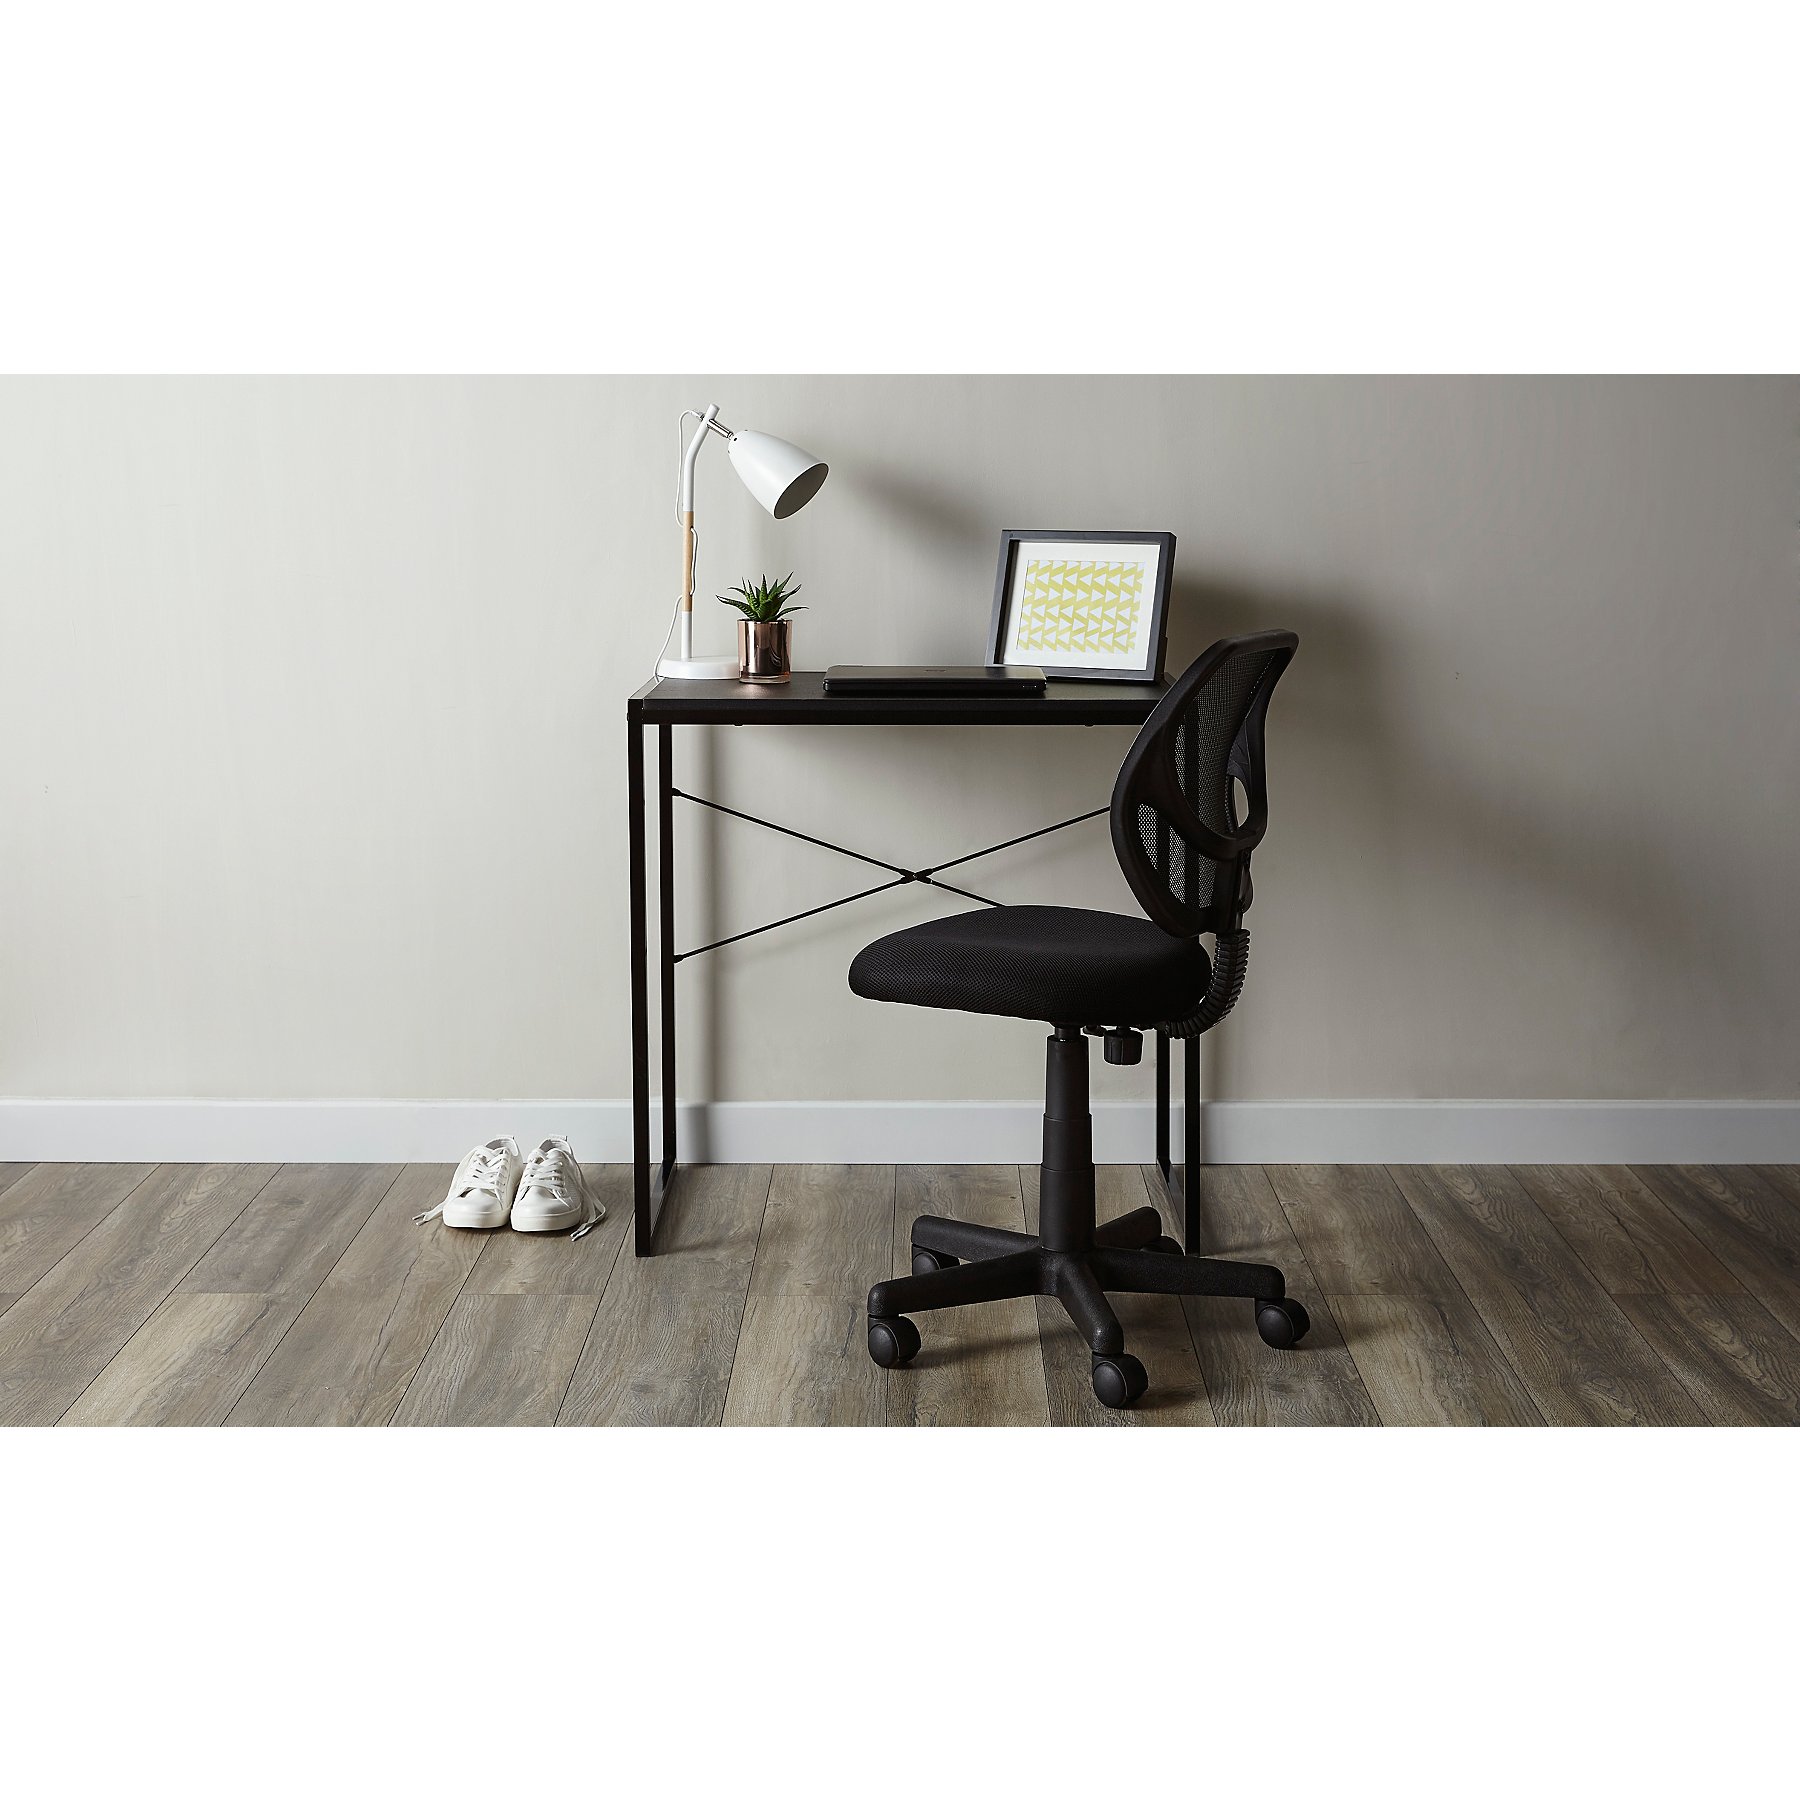 Mesh Office Chair Black Home George